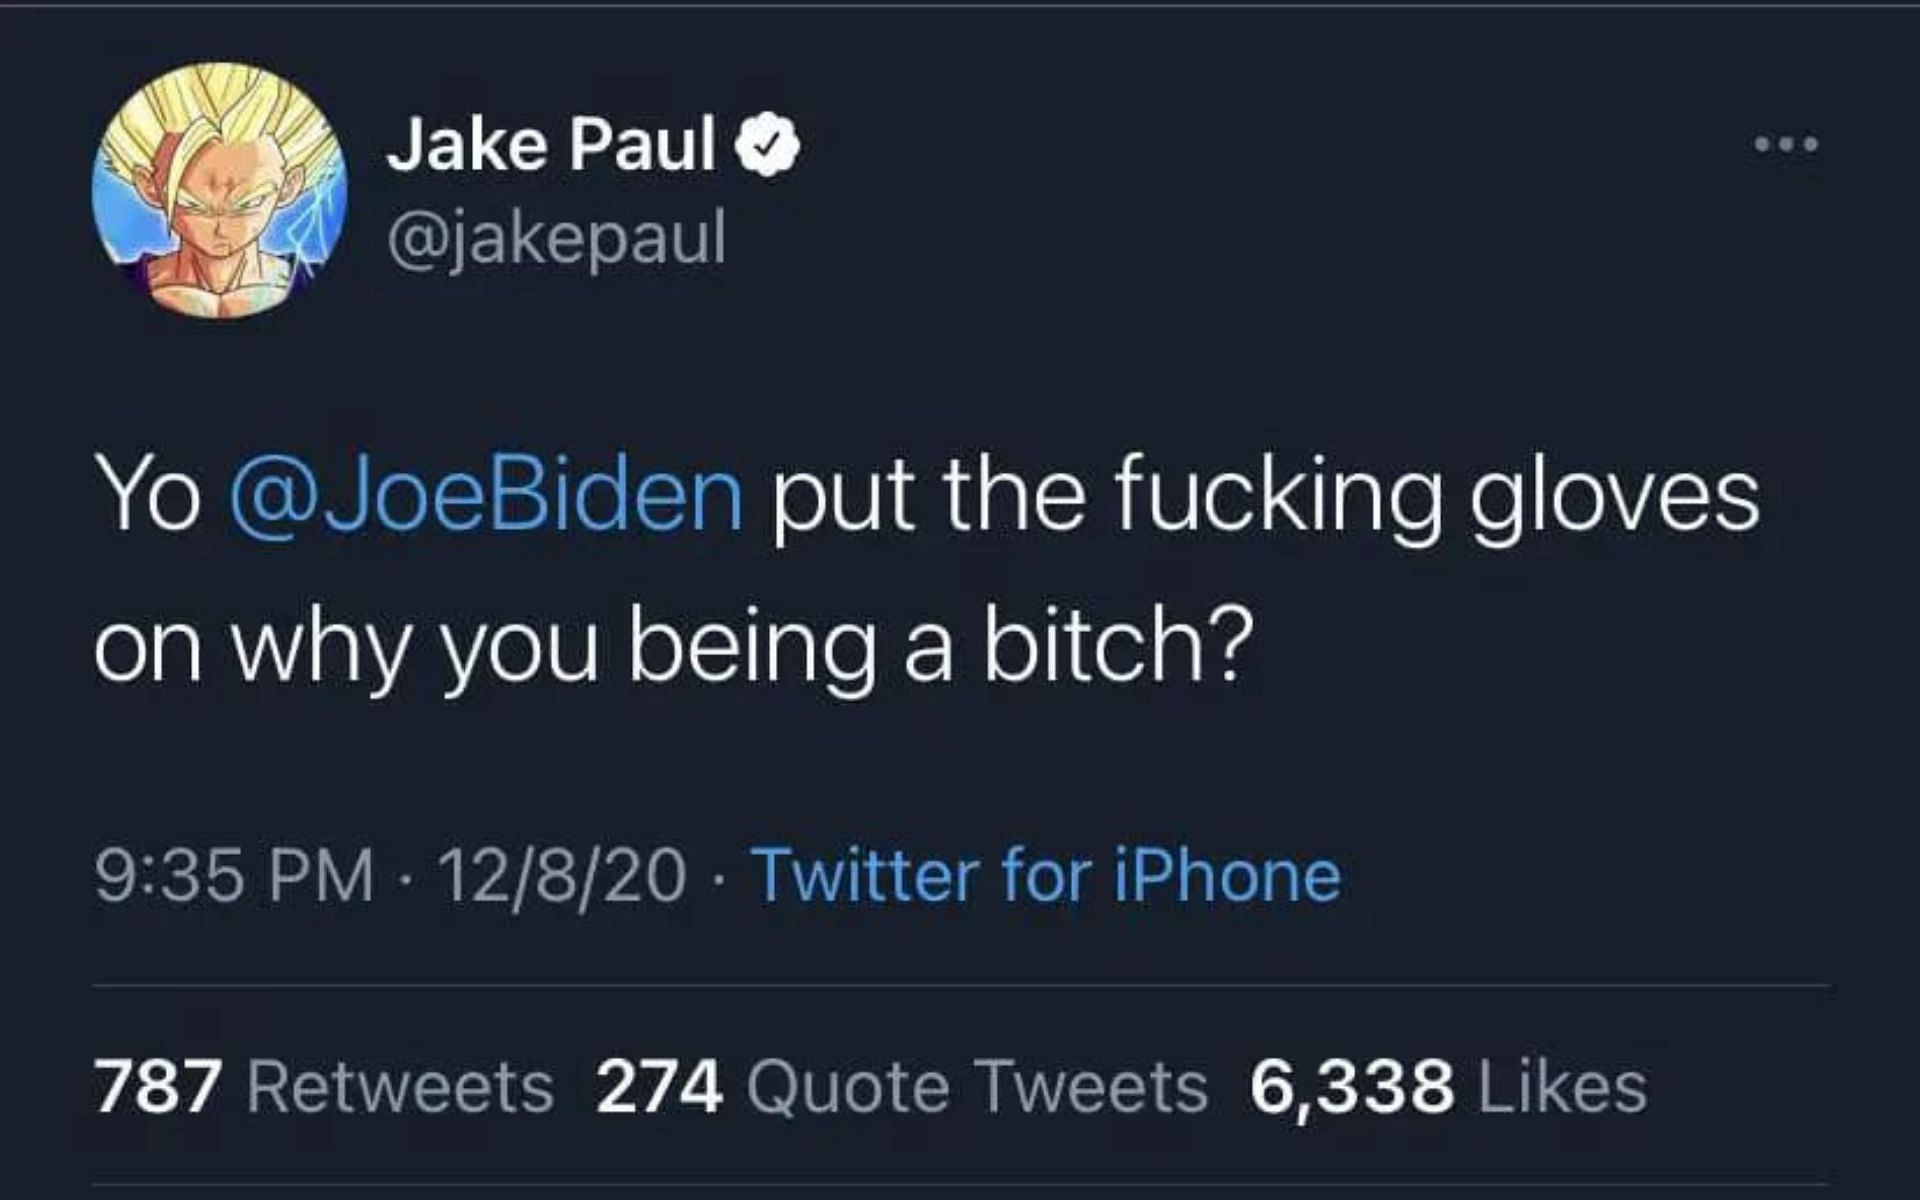 Jake Paul challenges Joe Biden to a boxing match